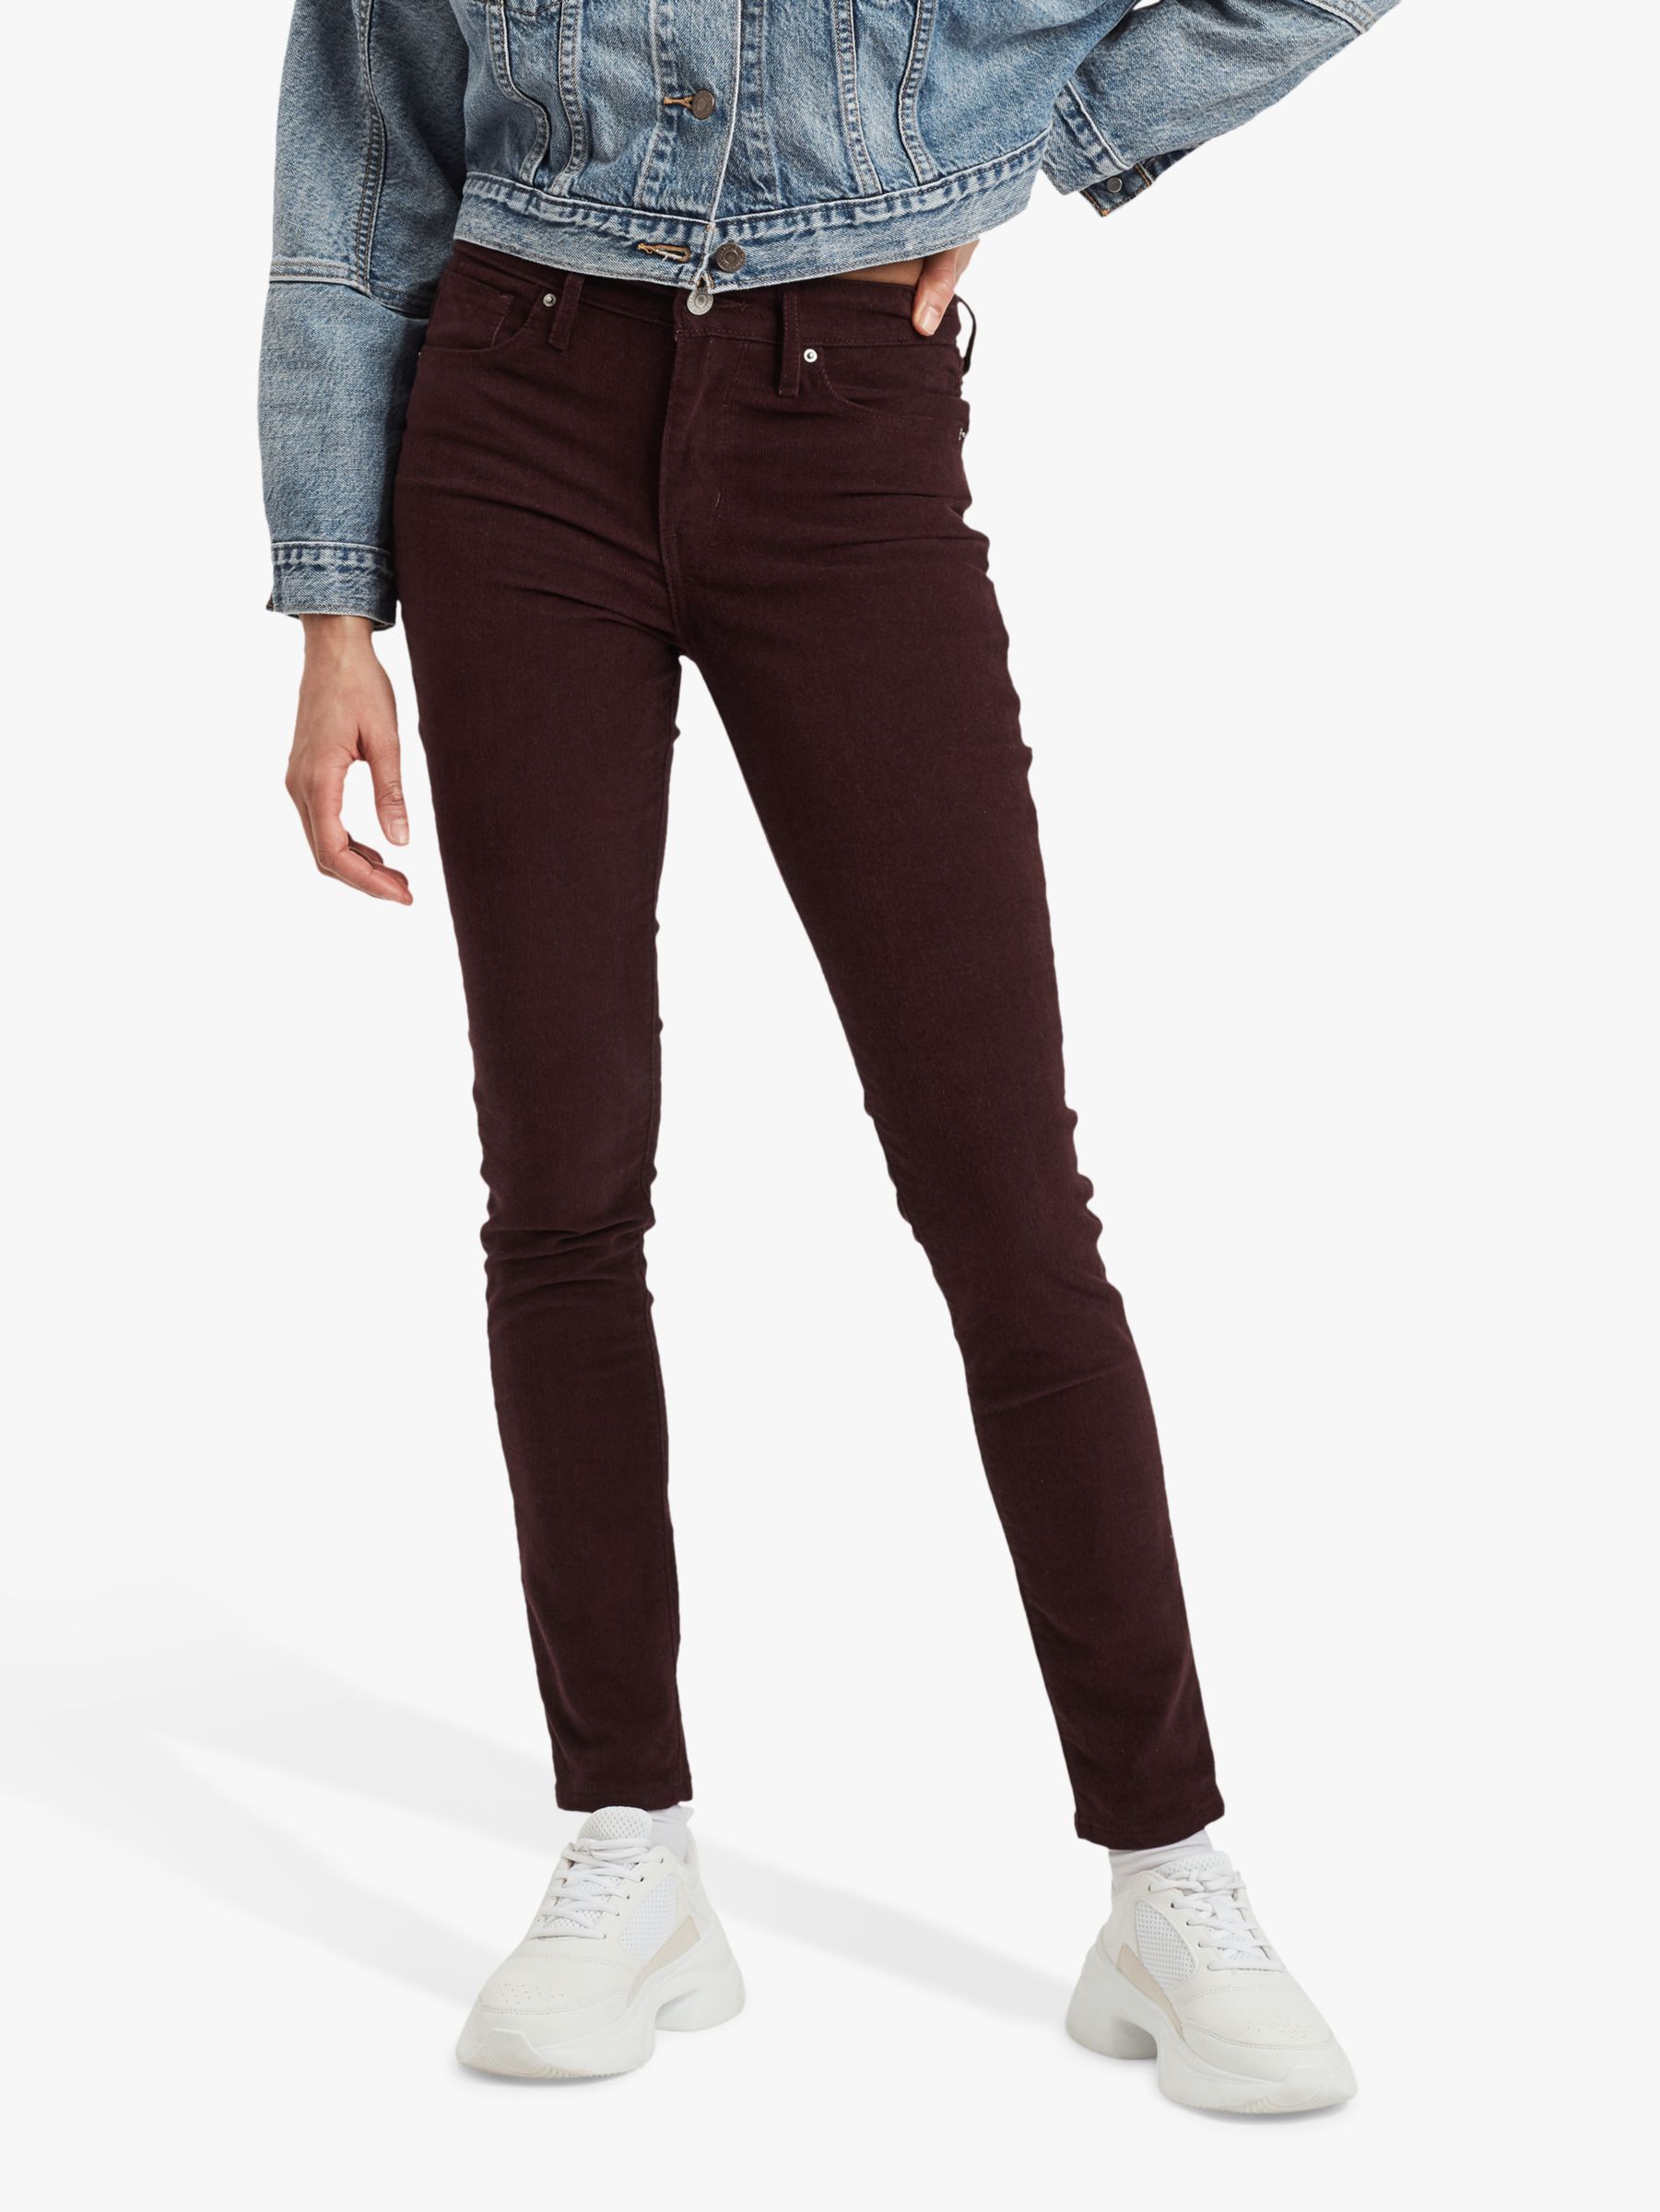 corduroy womens jeans